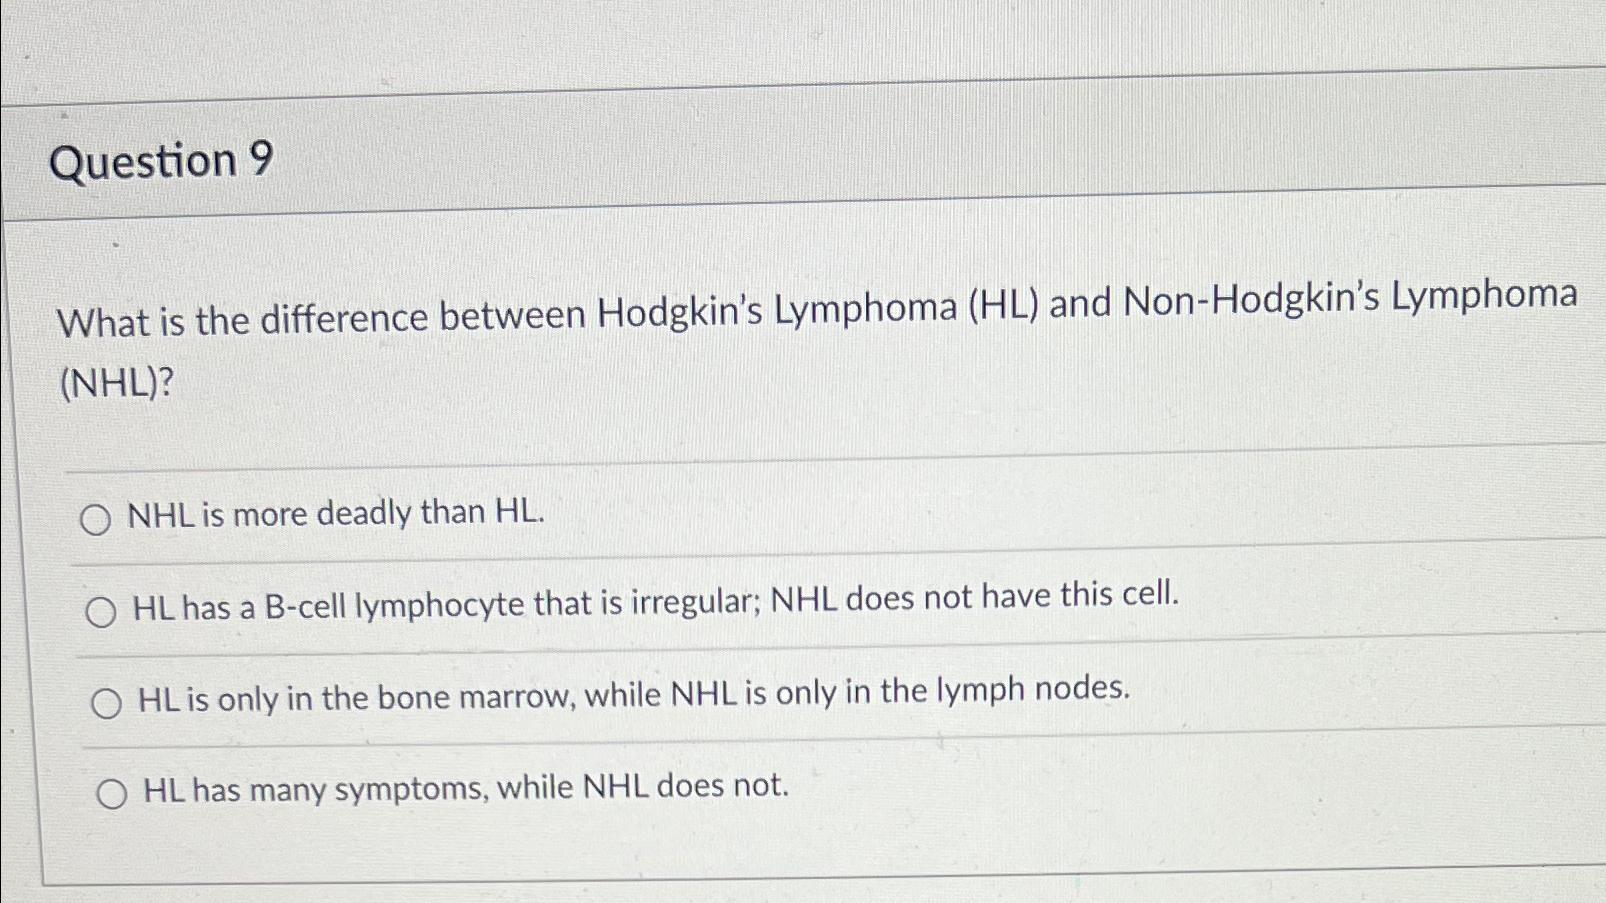 Hodgkin's Lymphoma vs Non-Hodgkin's Lymphoma - Comparison Hodgkin's